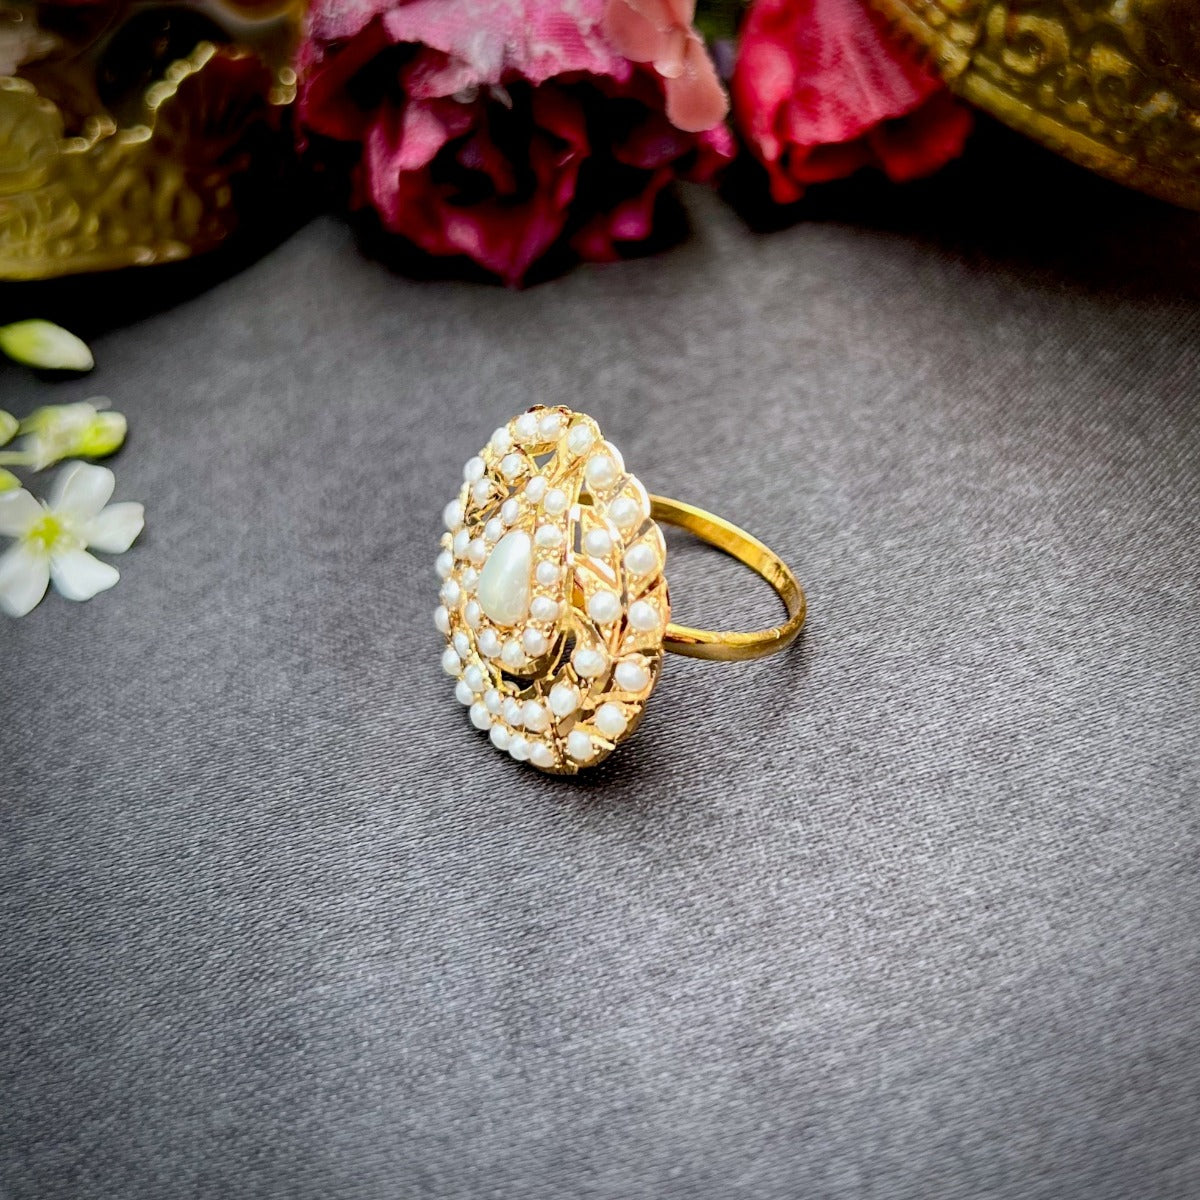 hyderabadi pearl ring in gold